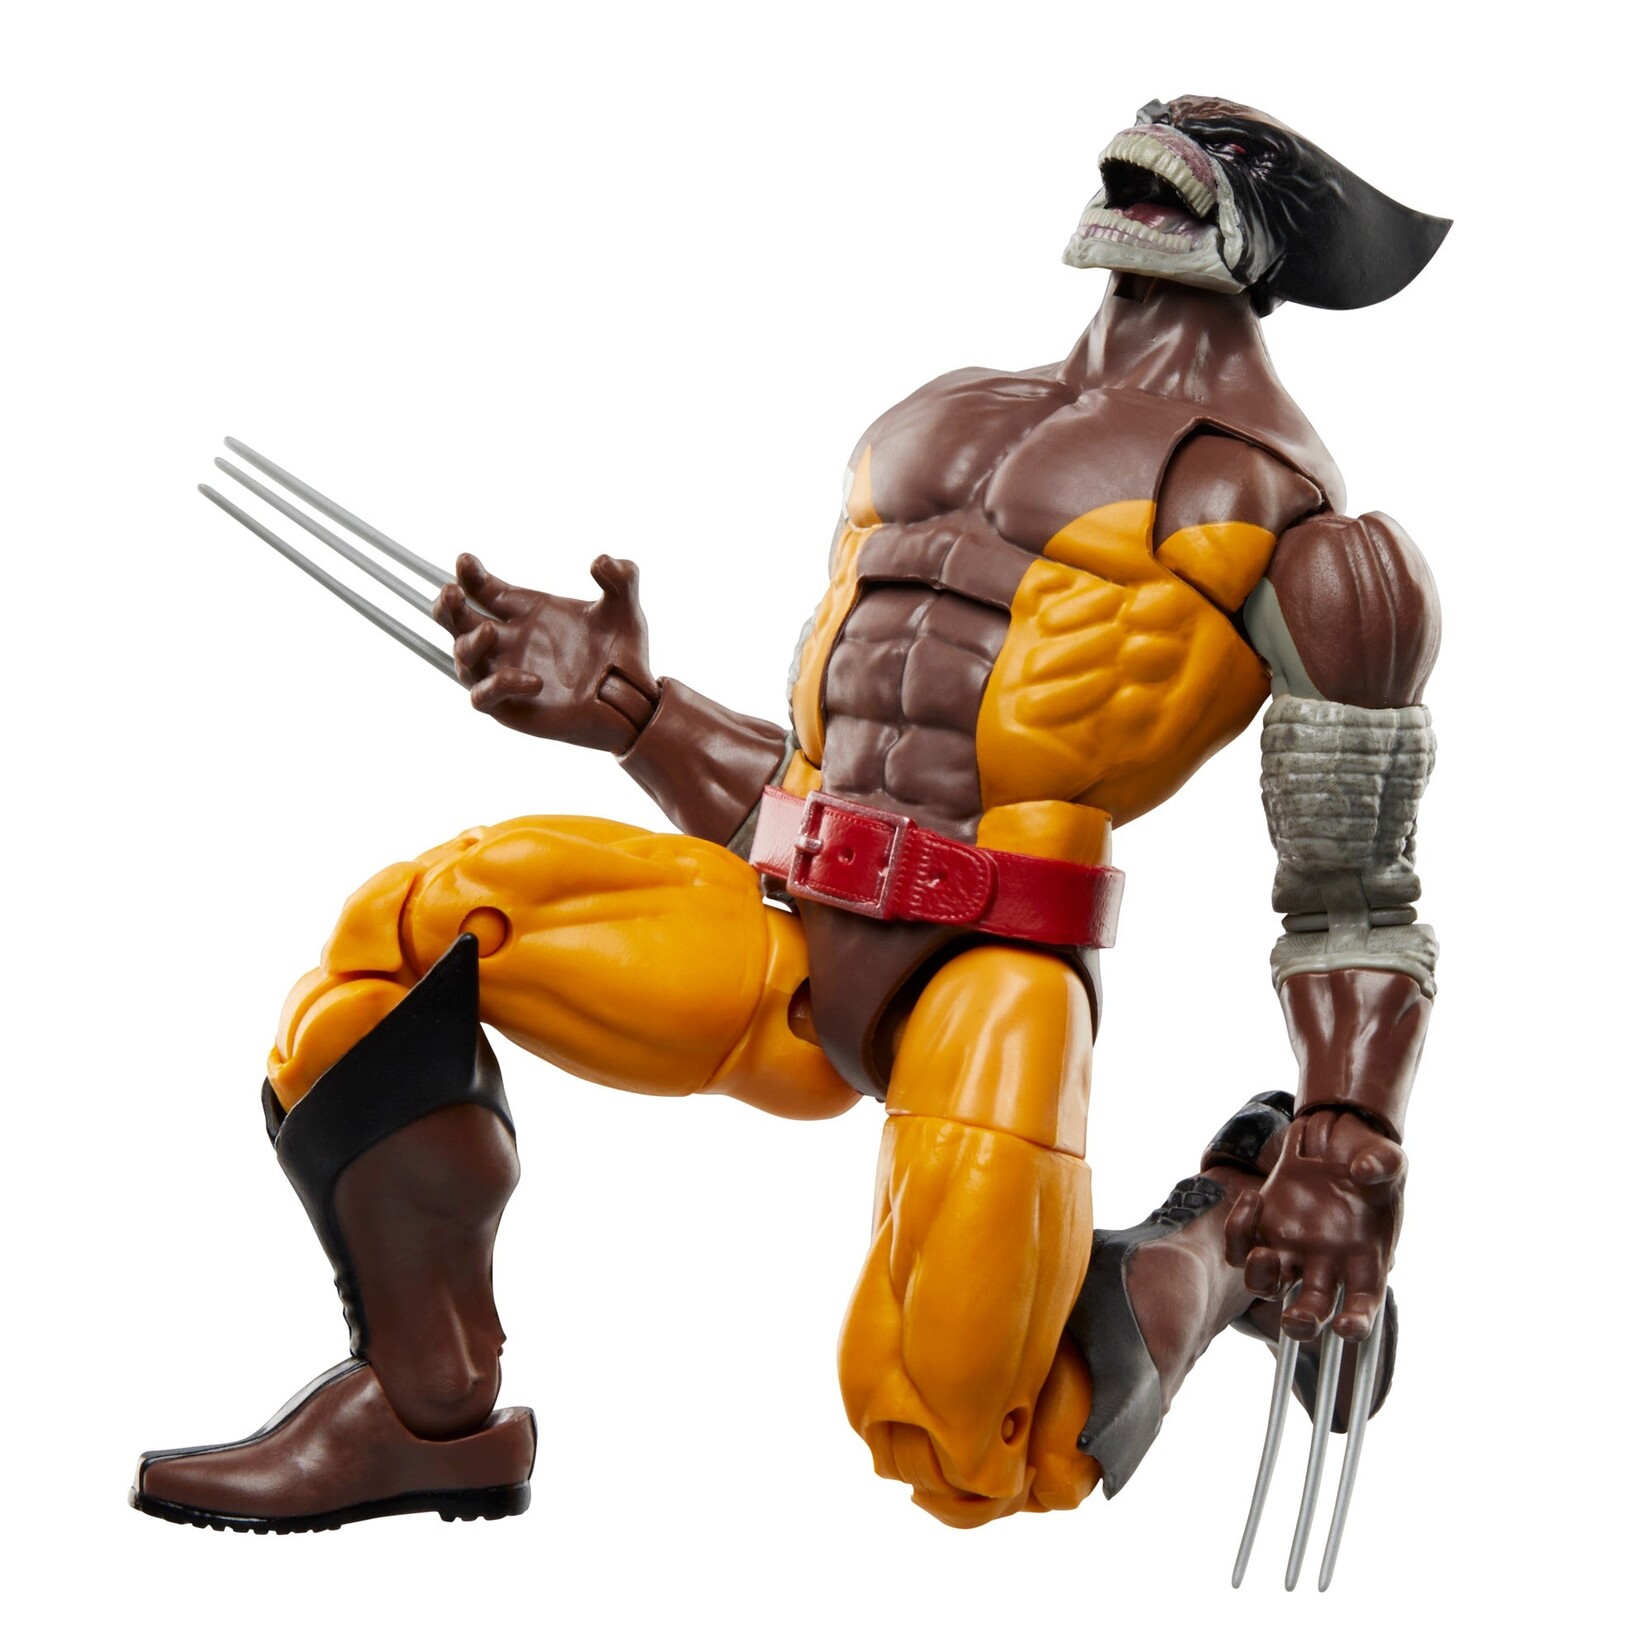 Hasbro Hasbro Marvel Wolverine 50th Anniversary Action Figure 2-Pack Wolverine & Lilandra Neramani 15 cm